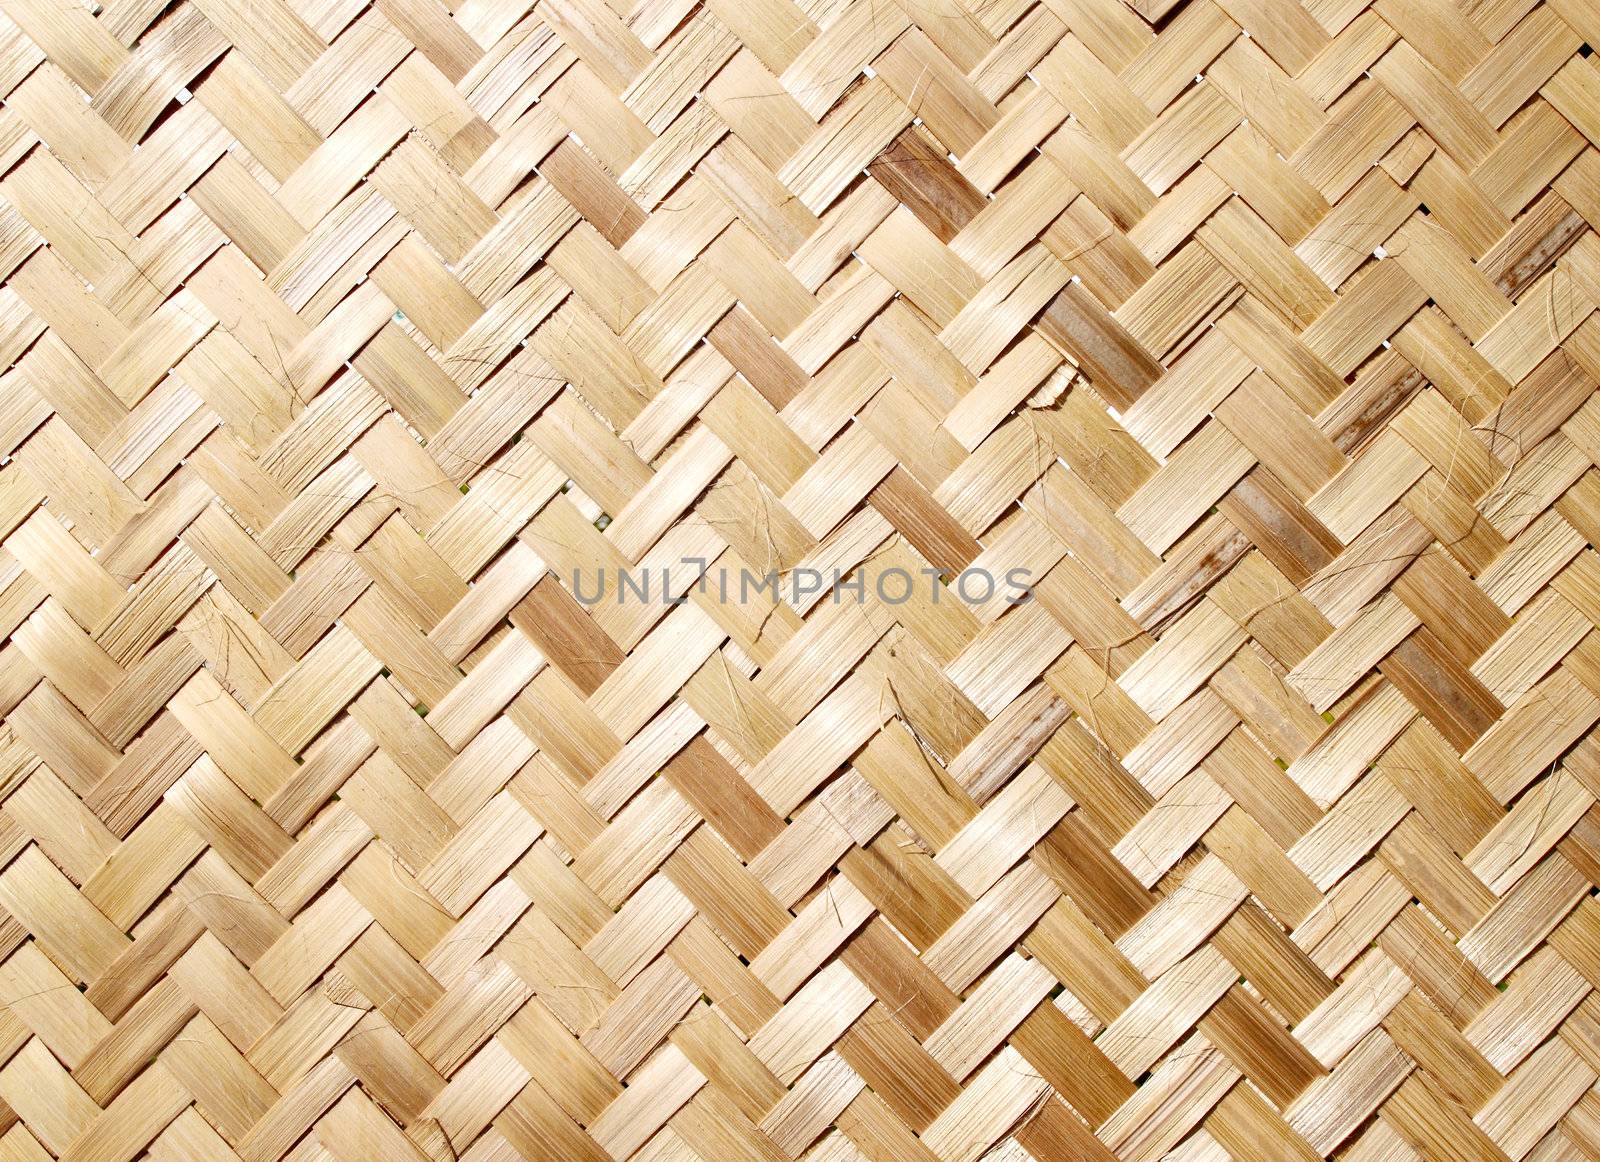 Bamboo wooden texture  by geargodz